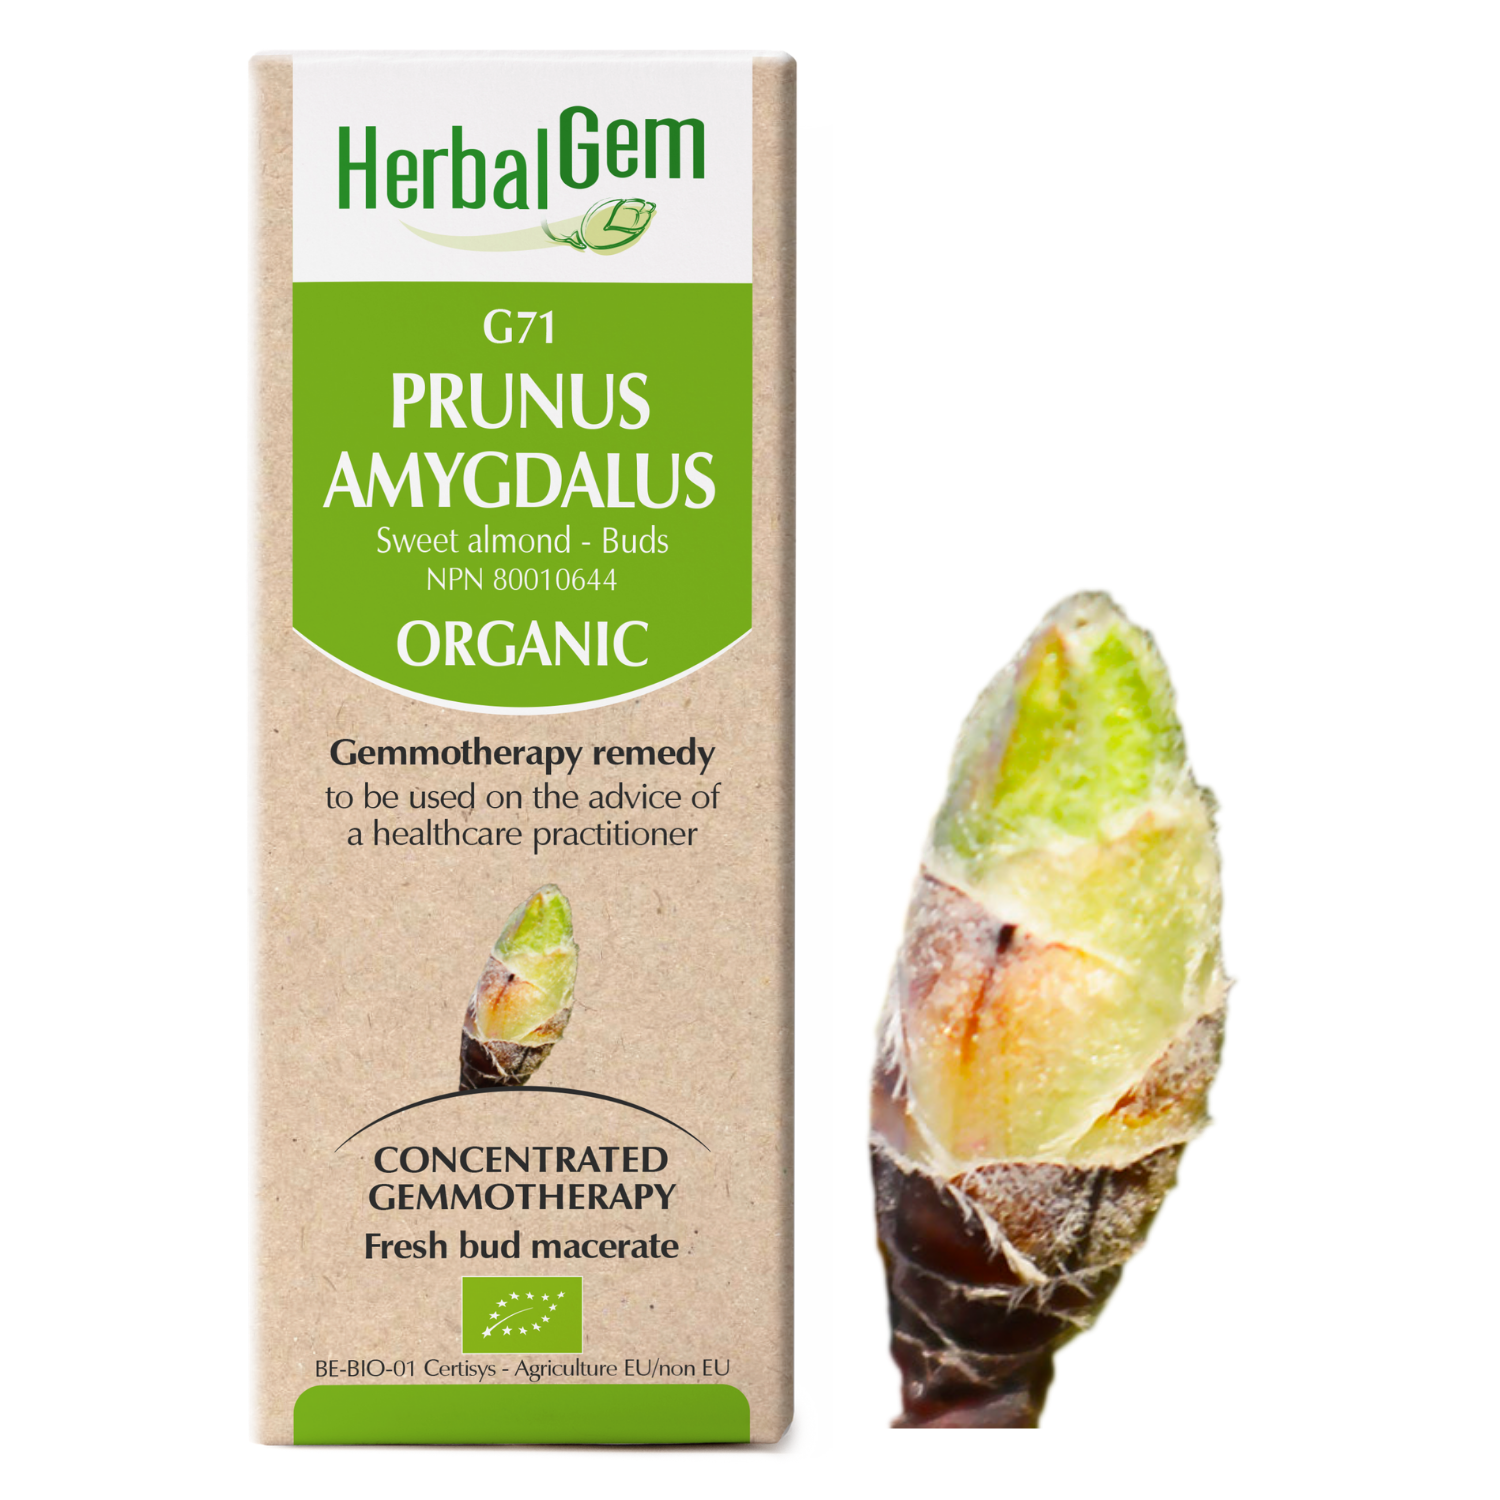 G71 Prunus amygdalus Gemmotherapy, Organic,  Sweet almond  Buds, 50ml